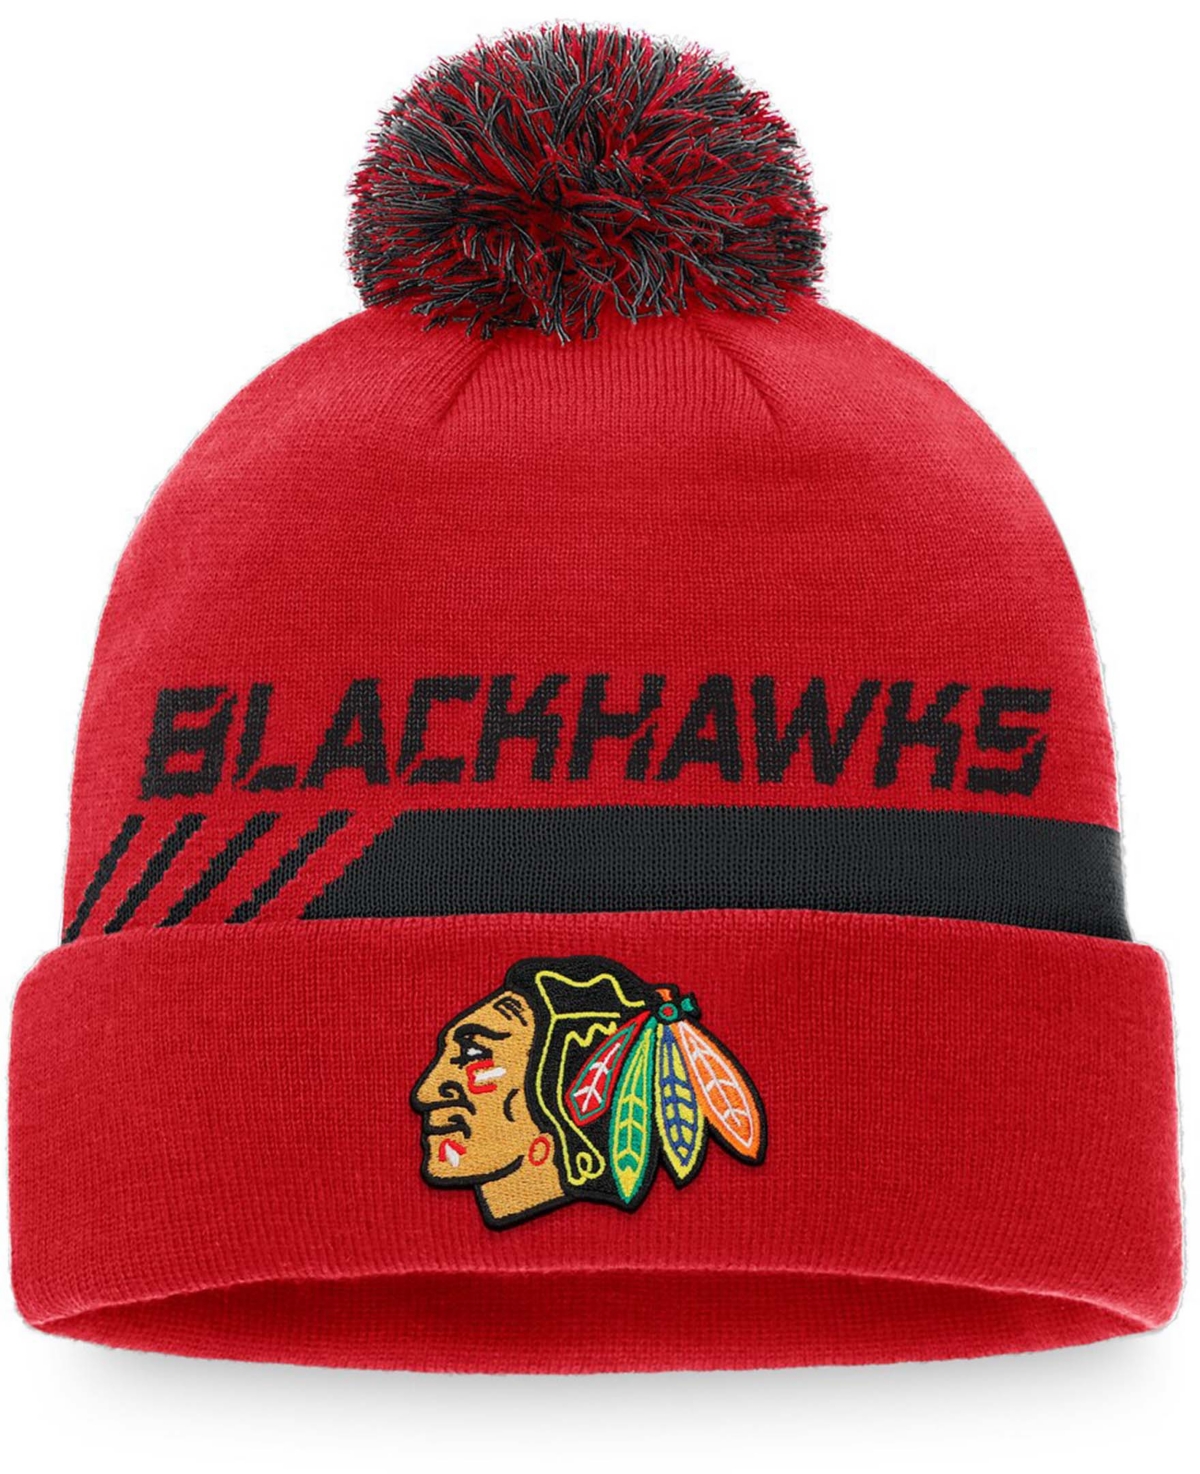 Lids Men's Fanatics Branded Red/black Chicago Blackhawks Authentic Pro Team Locker Room Cuffed Knit Hat W